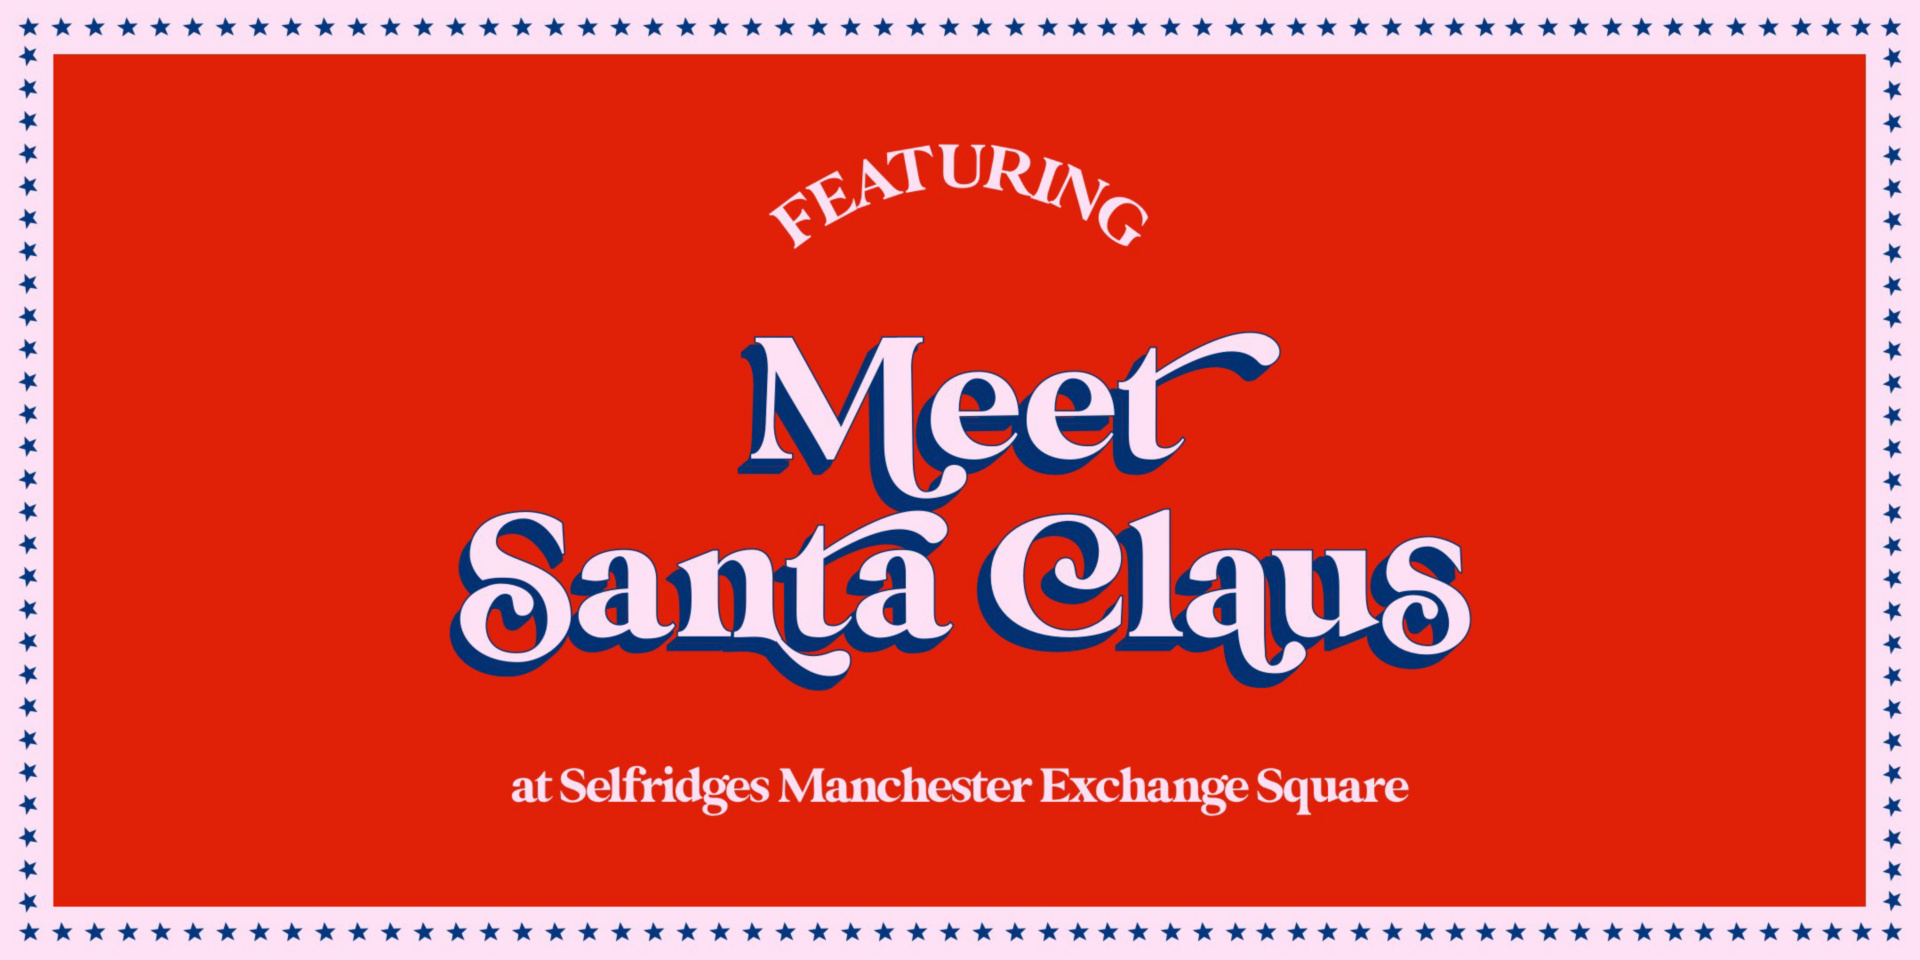 Meet Santa Claus at Selfridges Manchester Exchange Square